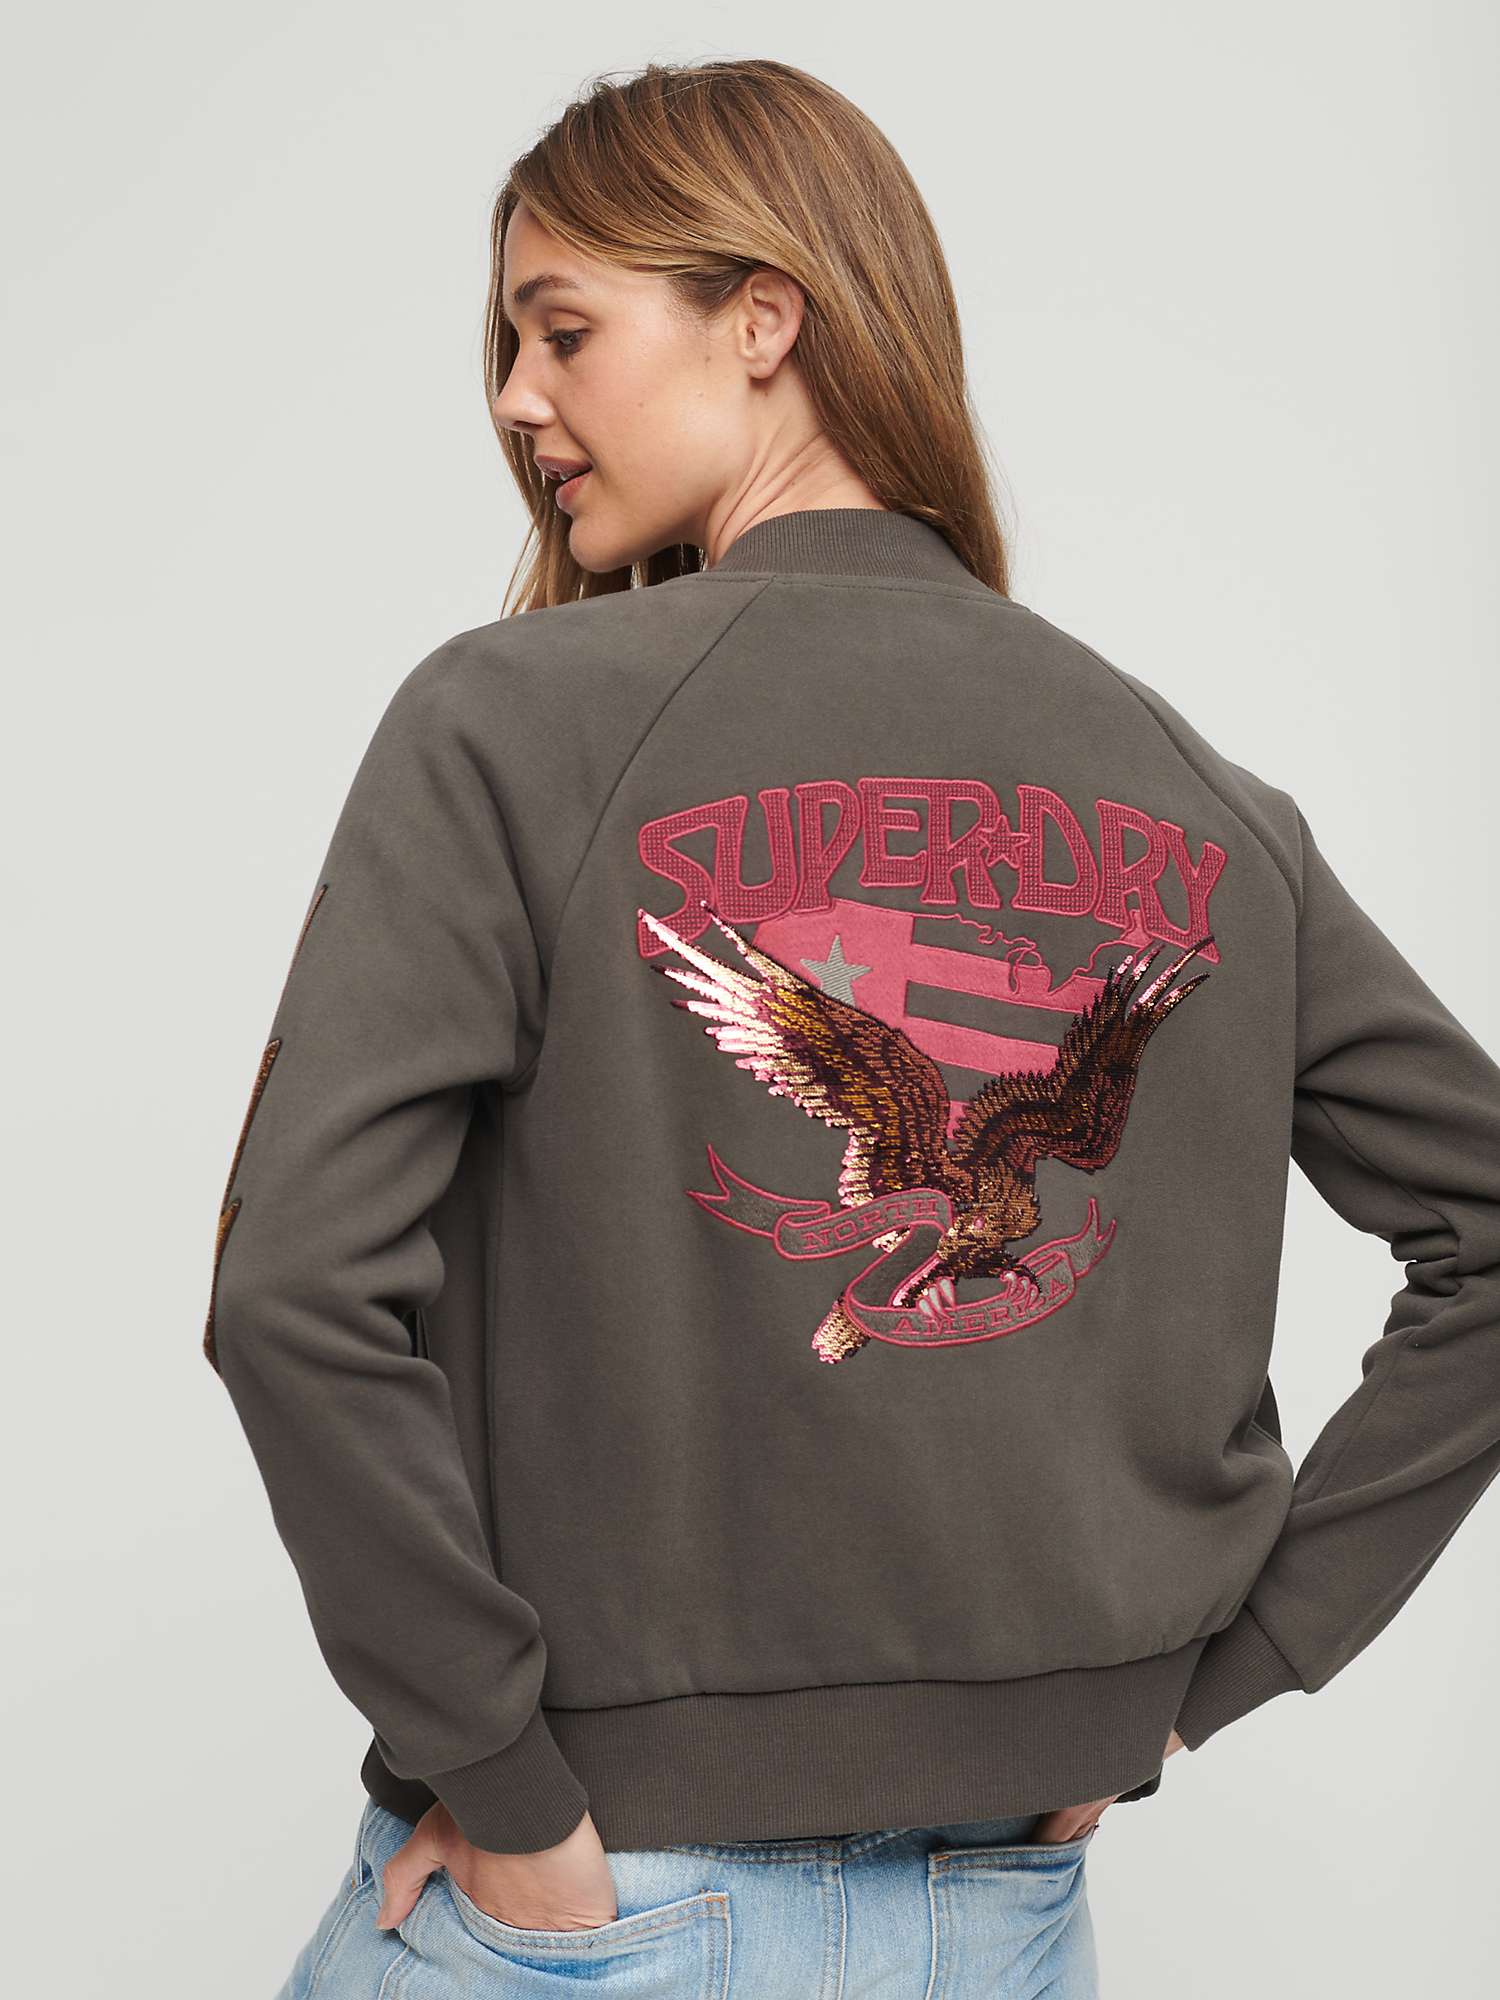 Buy Superdry 70s Lo-Fi Band Jersey Bomber Jacket, Vintage Grey Online at johnlewis.com